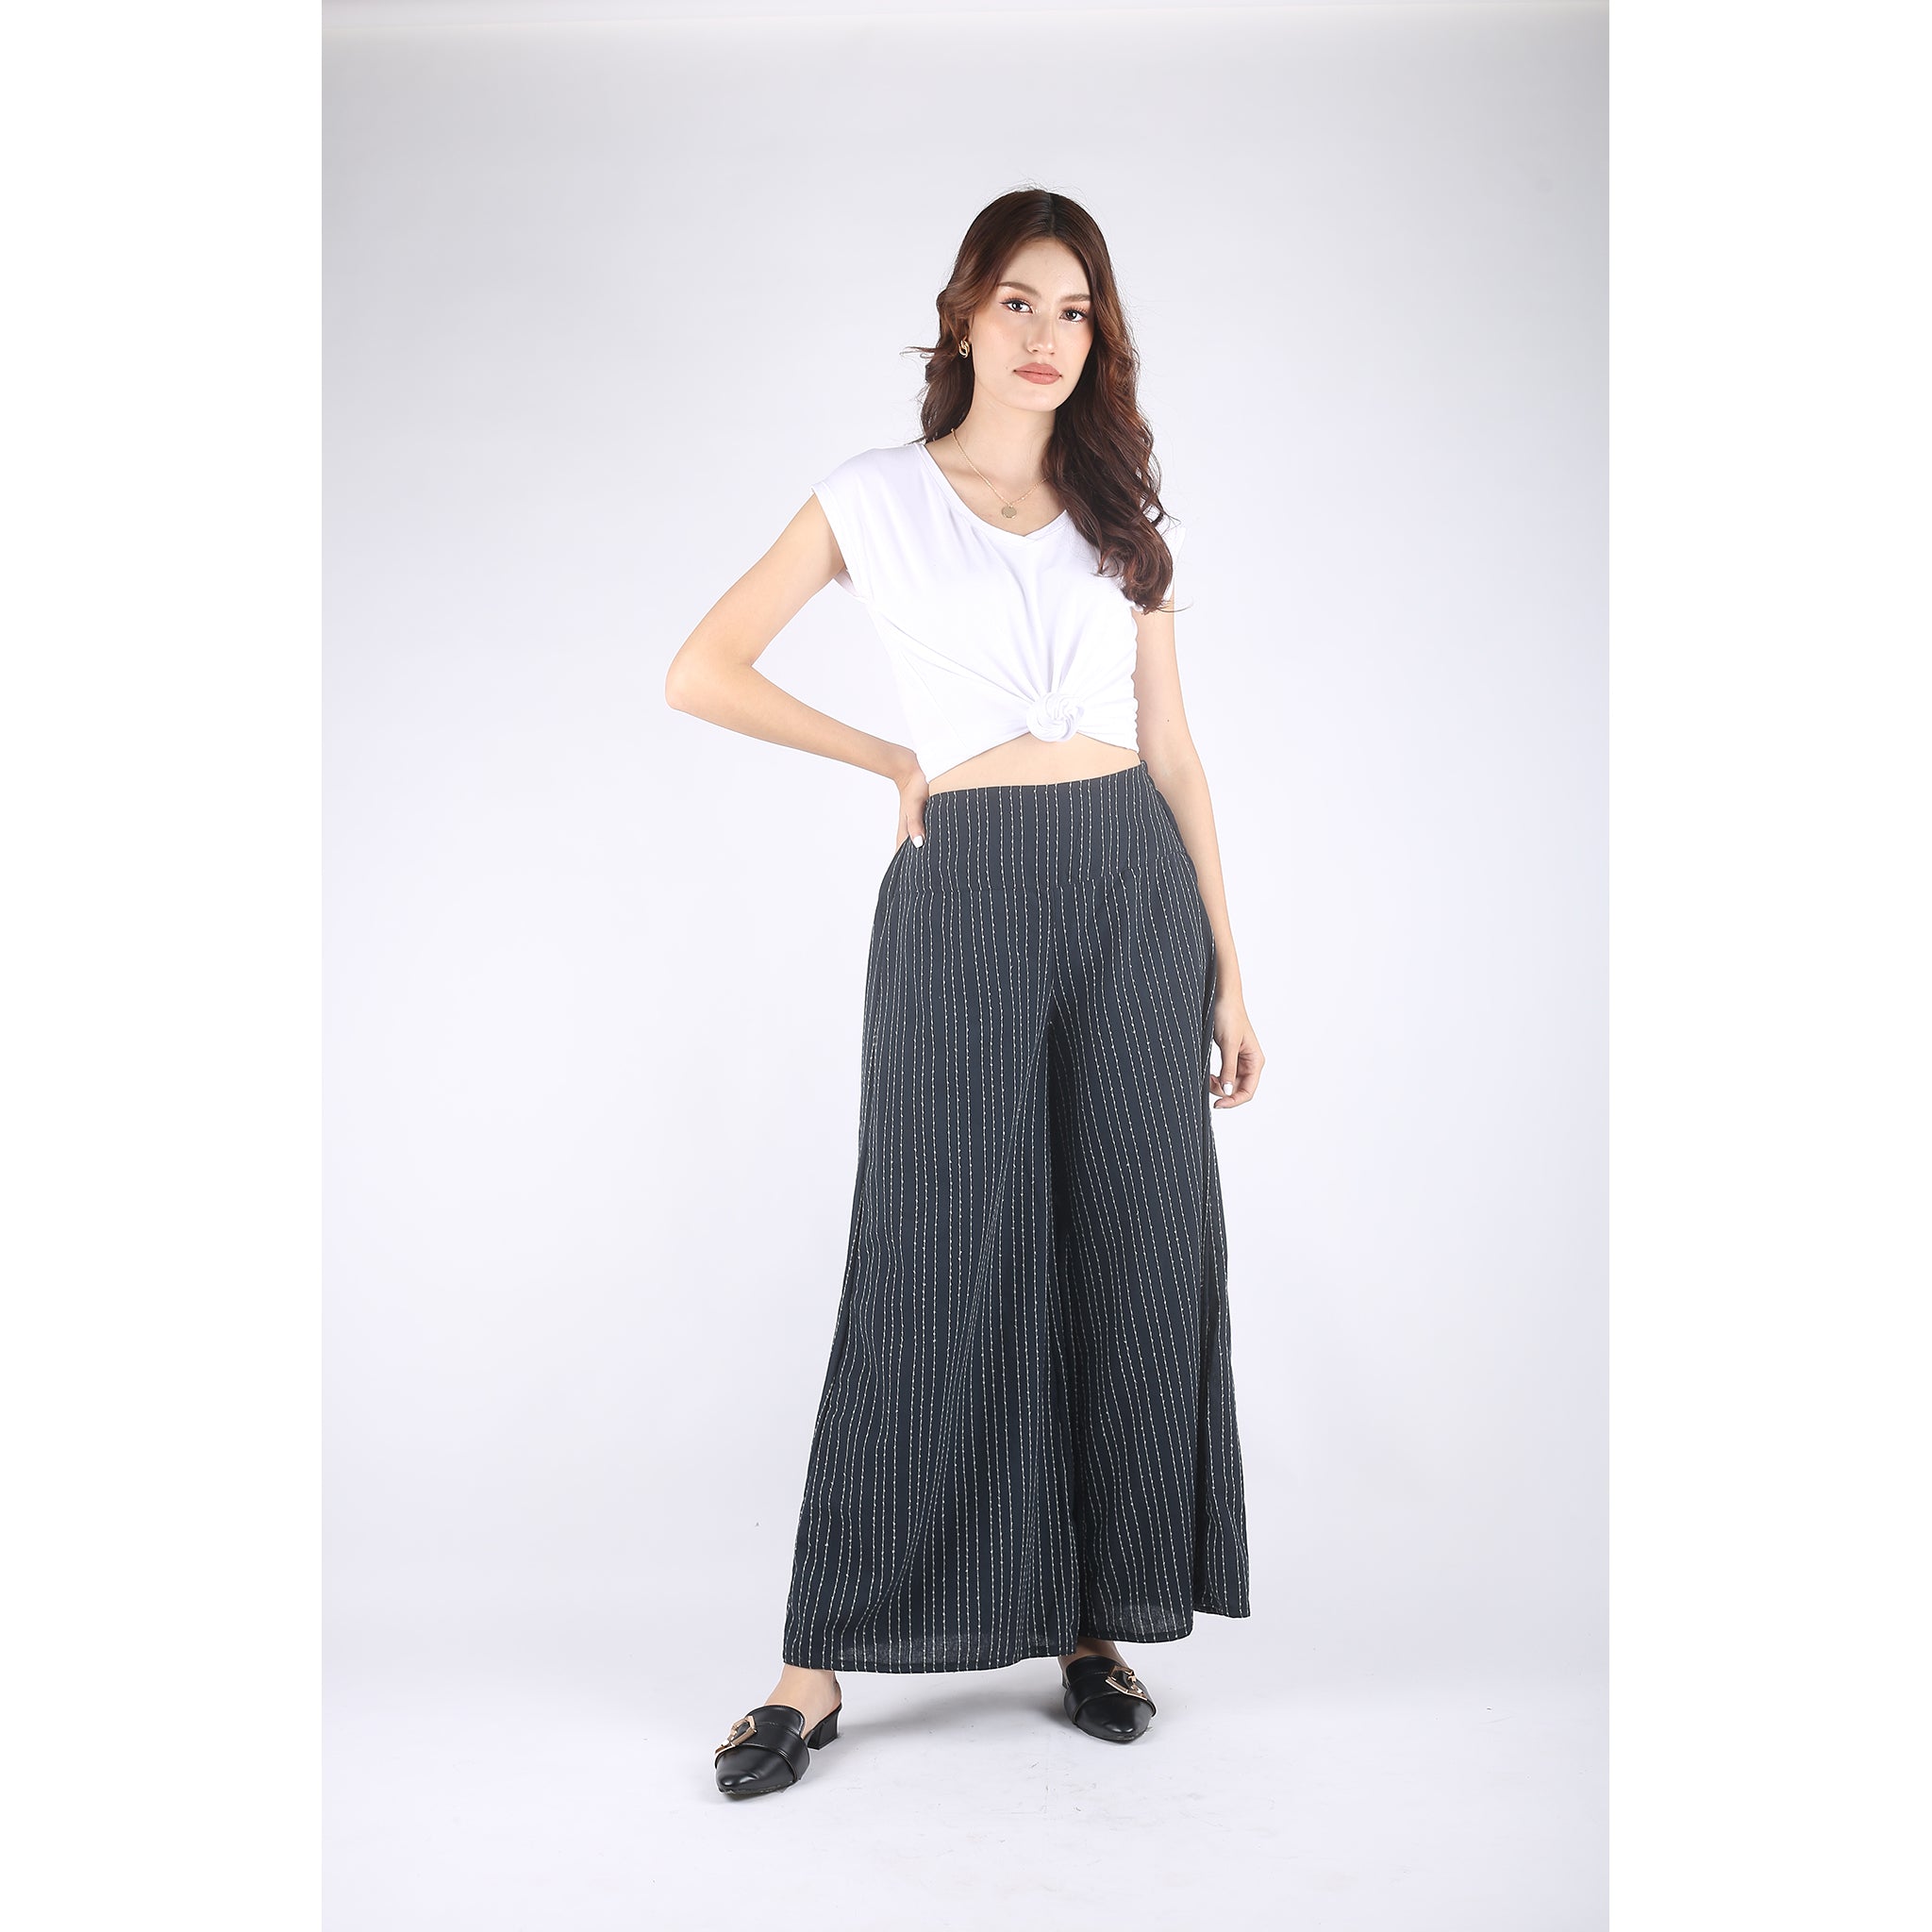 Linen cotton palazzo pants - Ref11145 – ATIR BCN